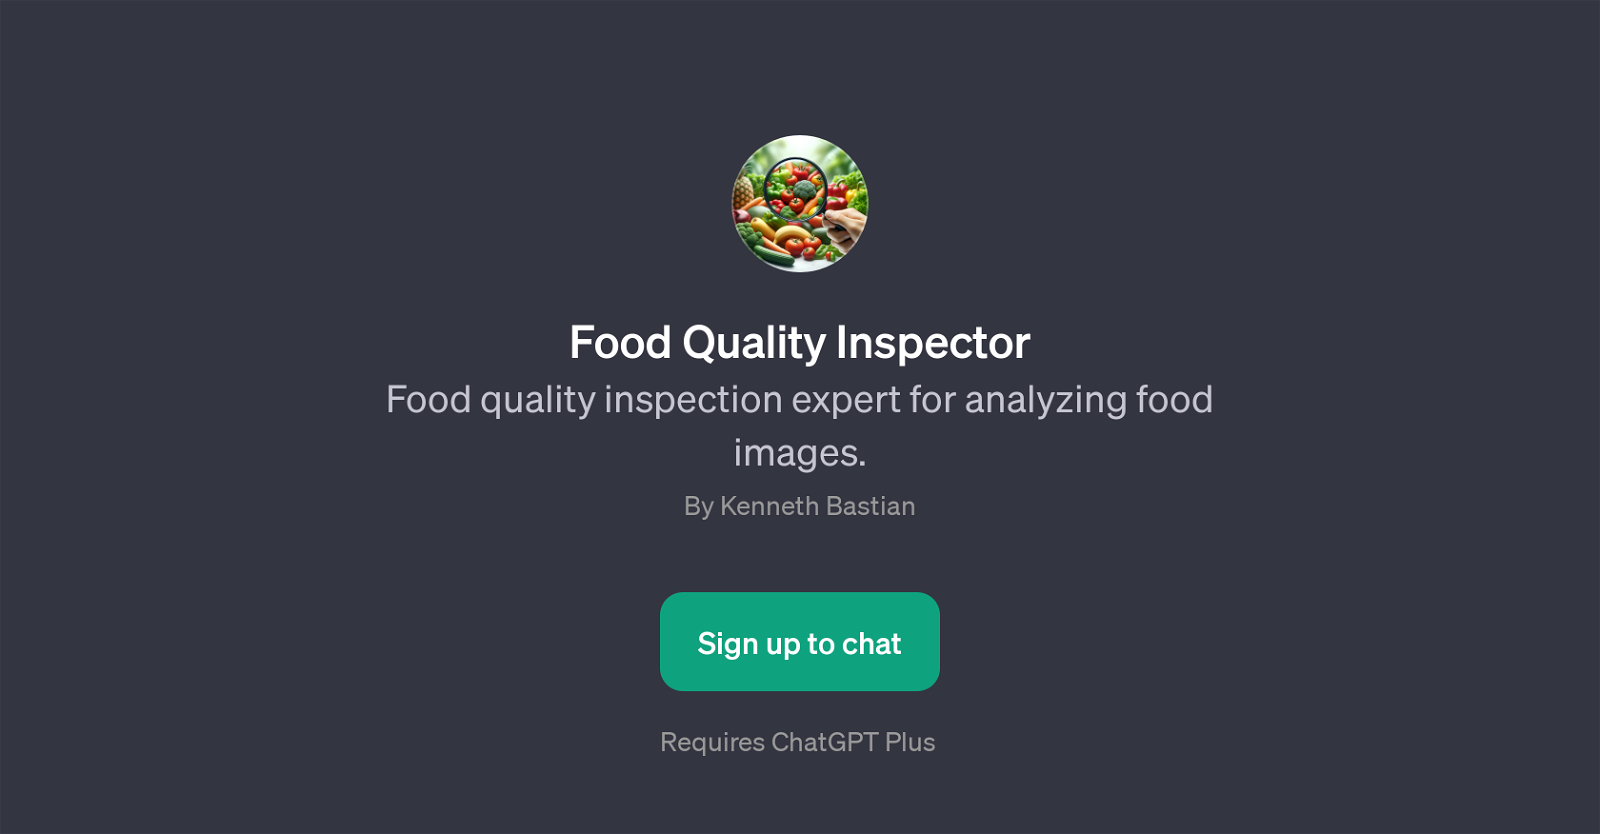 Food Quality Inspector website